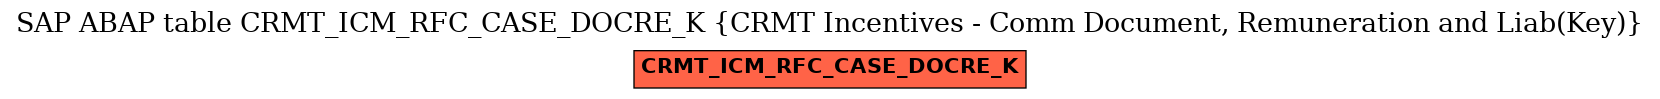 E-R Diagram for table CRMT_ICM_RFC_CASE_DOCRE_K (CRMT Incentives - Comm Document, Remuneration and Liab(Key))